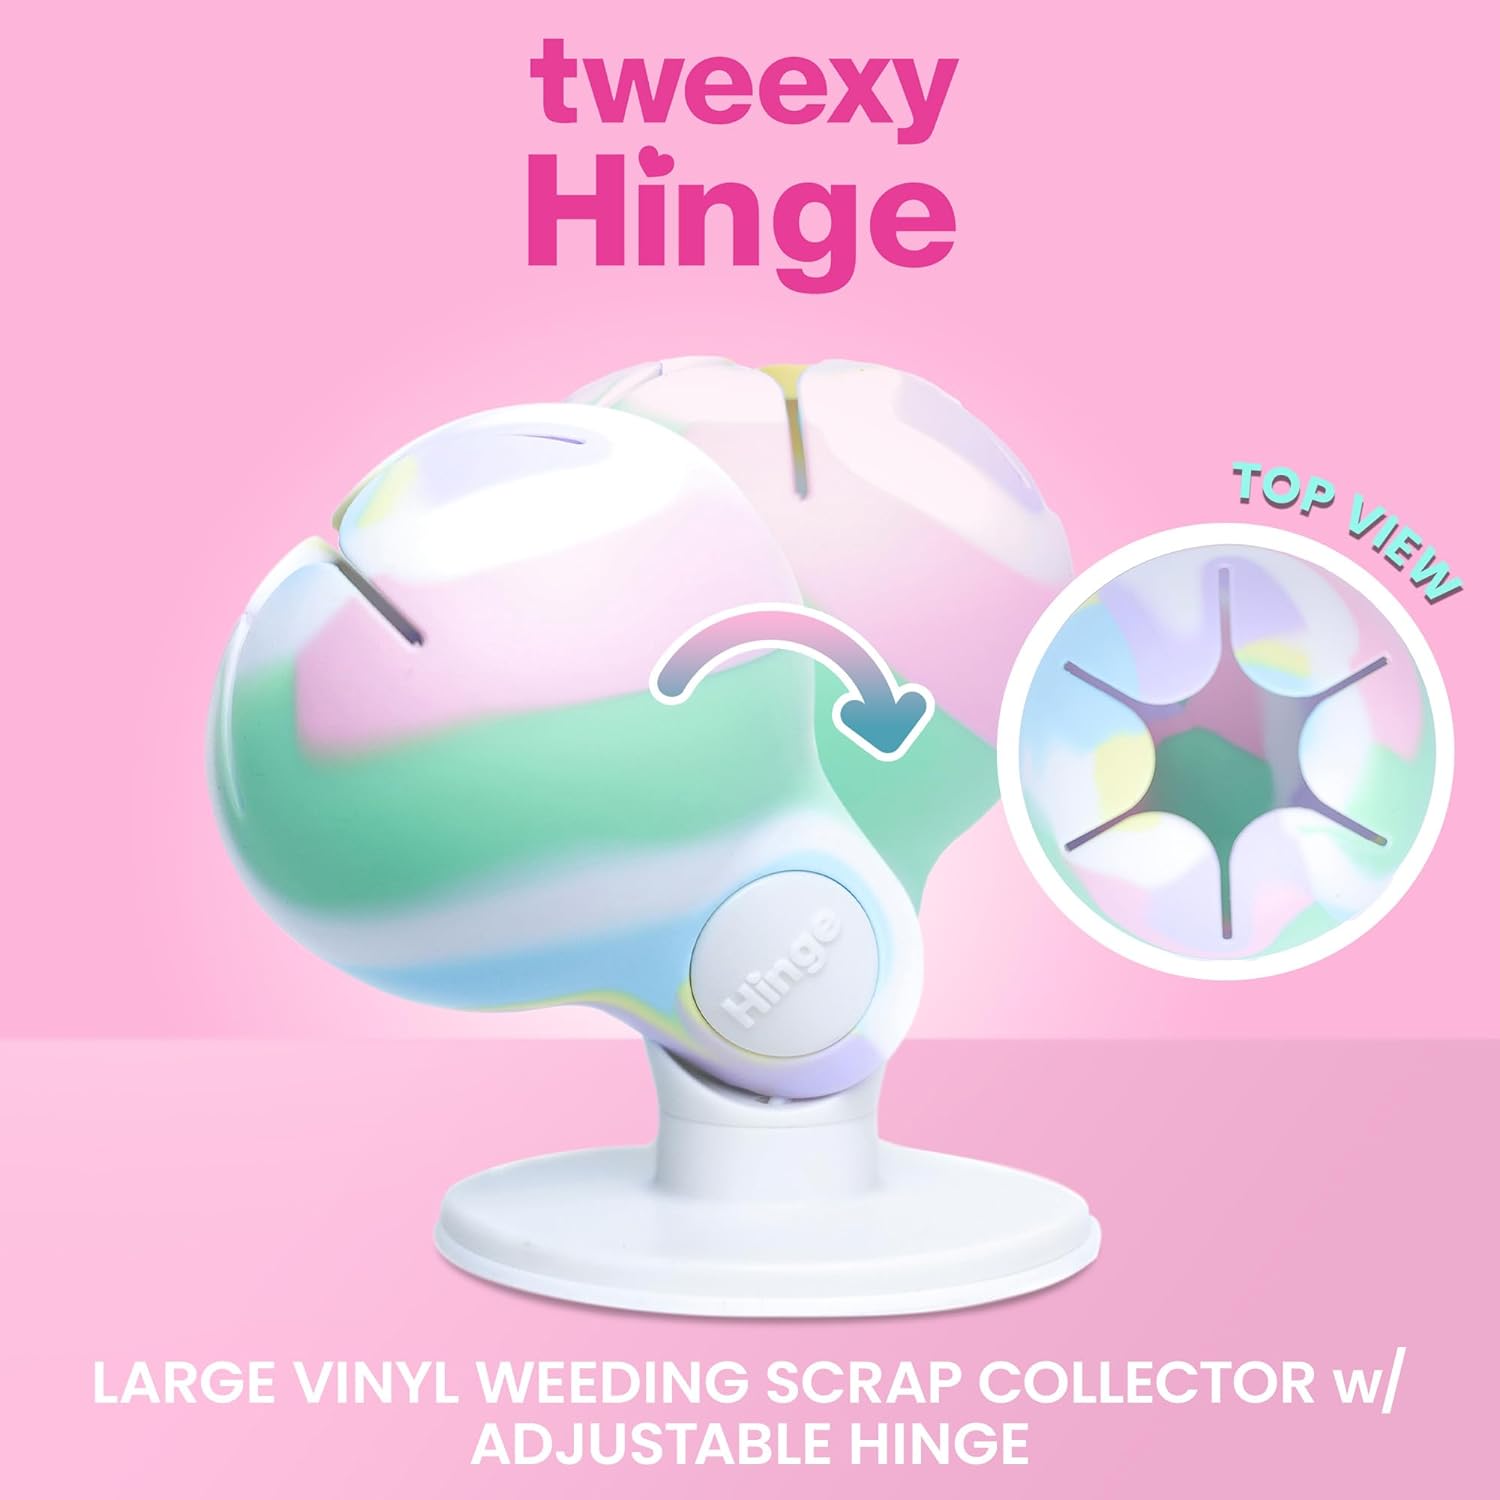 Tweexy Hinge Untippable Vinyl Weeding Scrap Collector Large